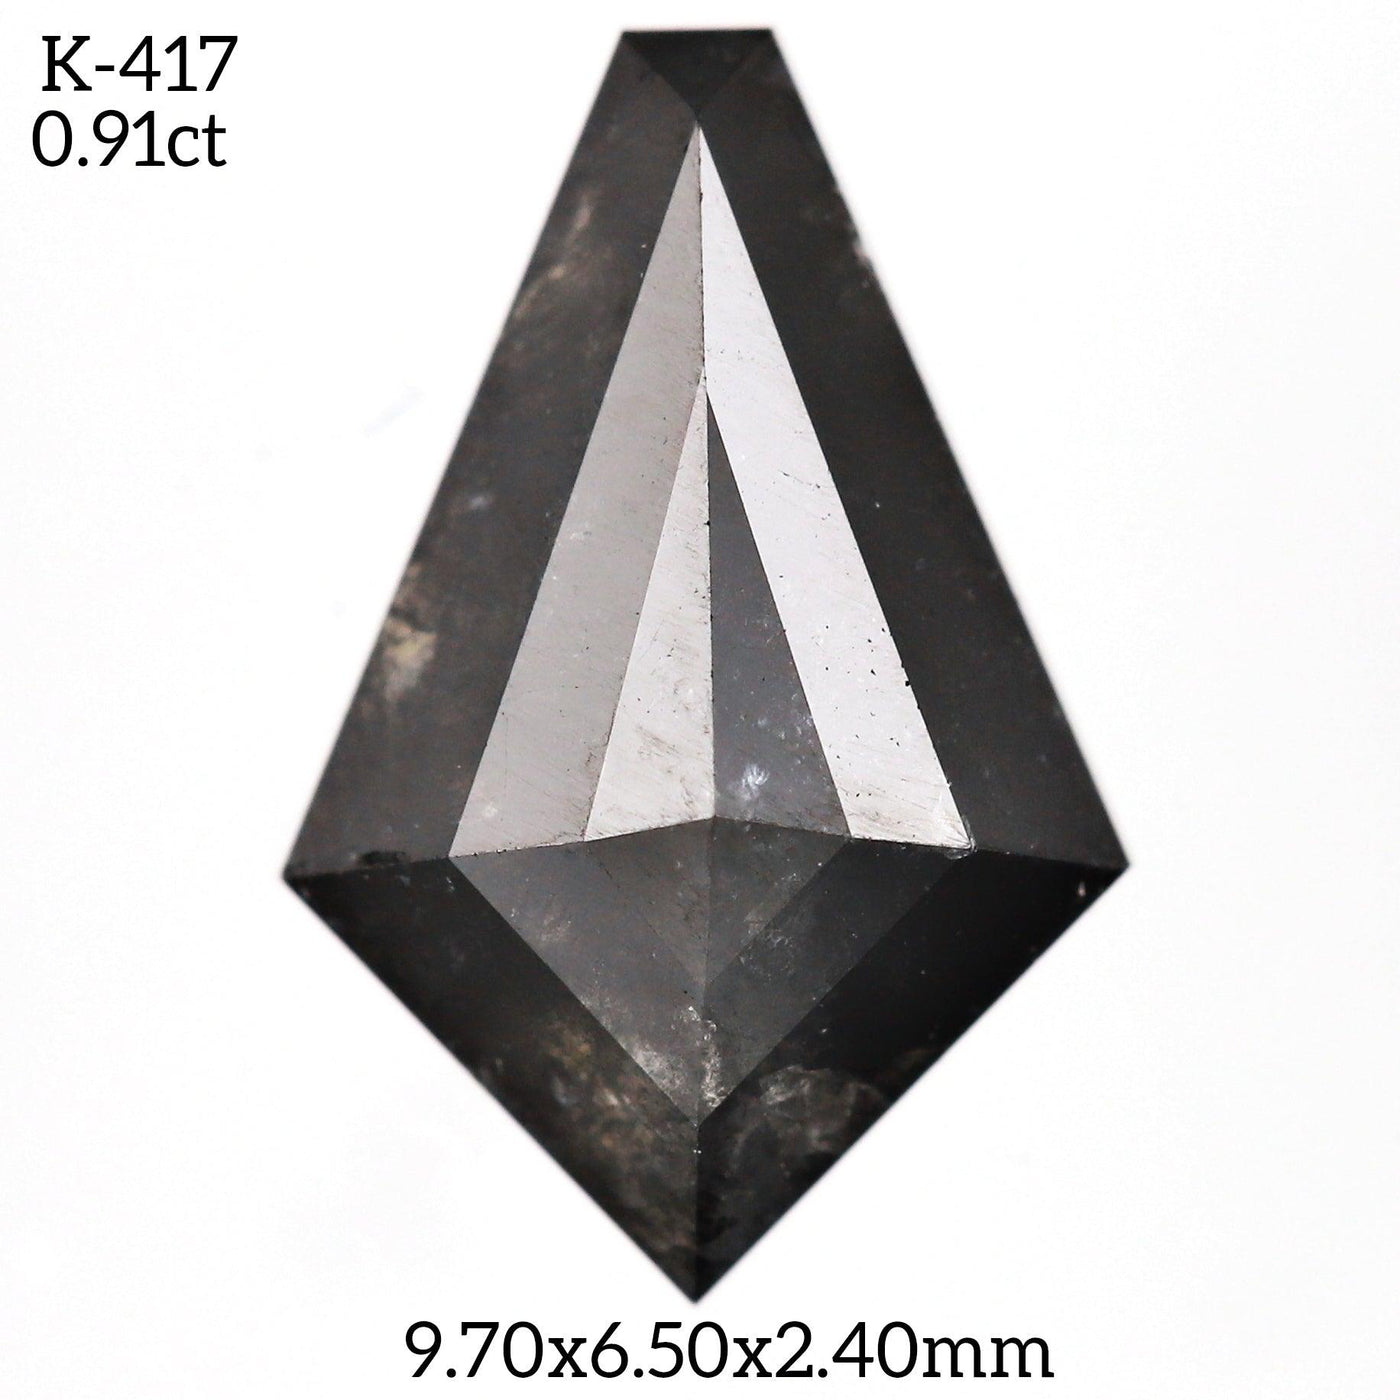 K417 - Salt and pepper kite diamond - Rubysta